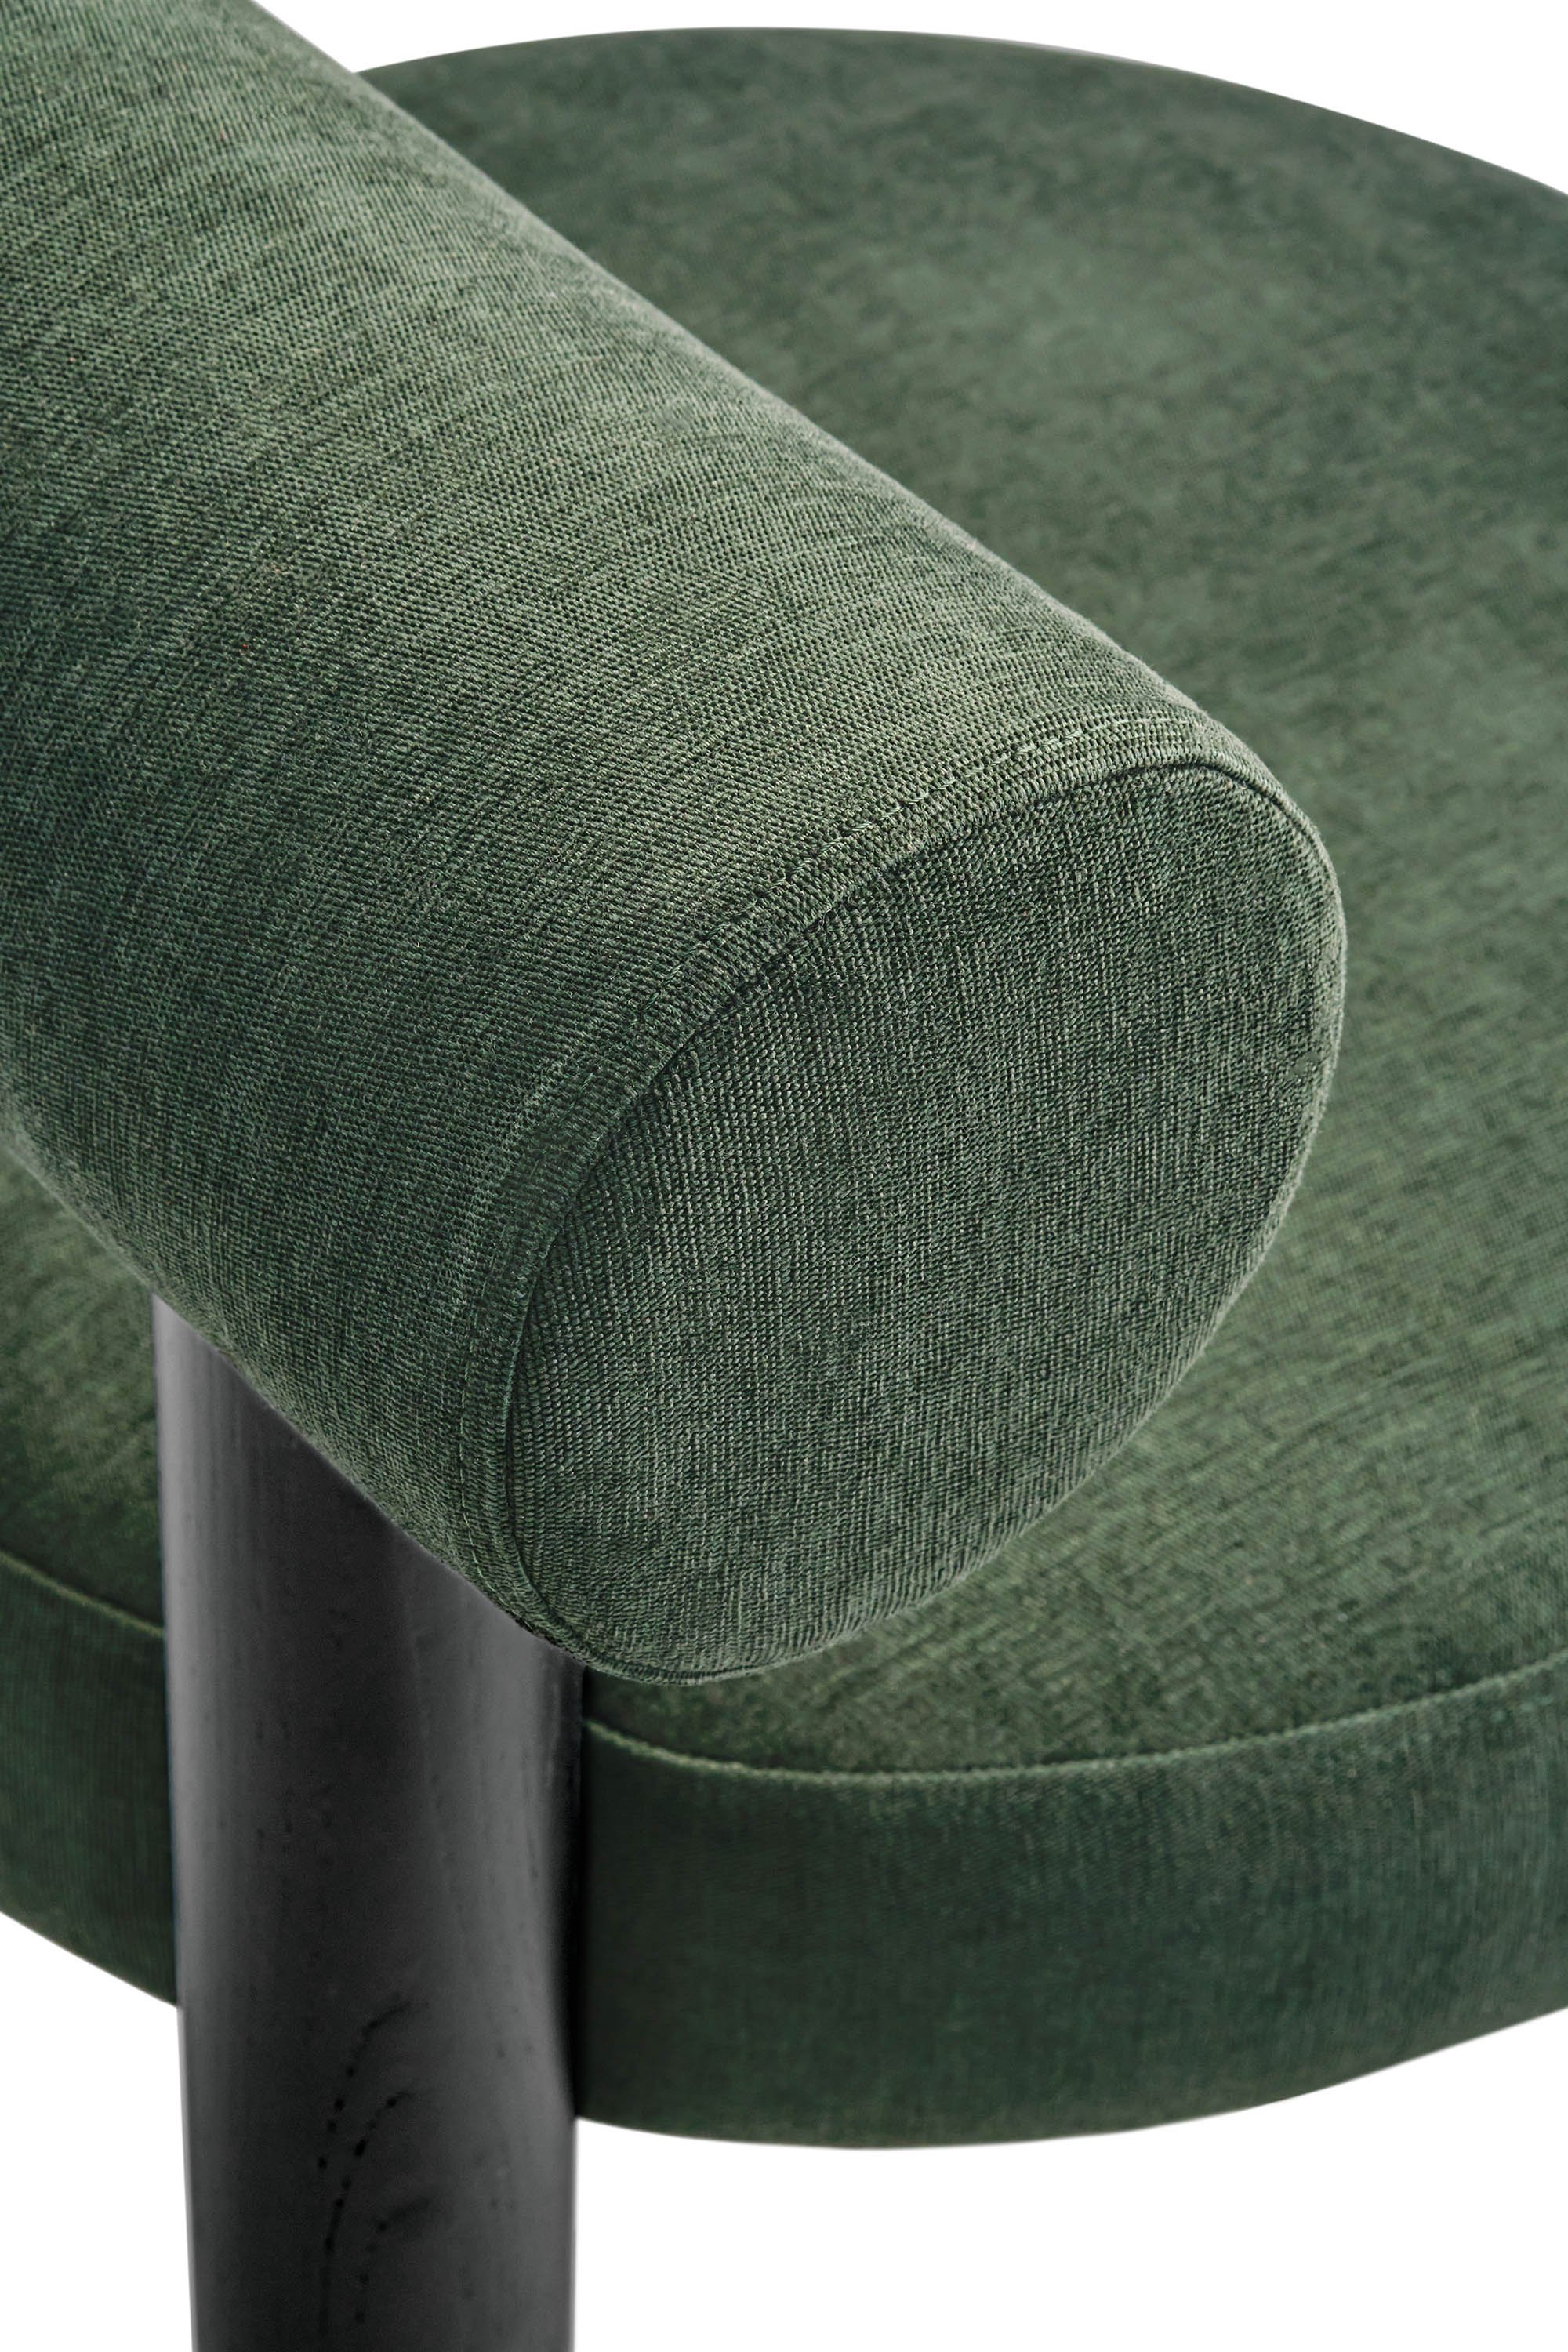 Gropius chair_Glamour Textiles, Ranger - 68 (17).jpg